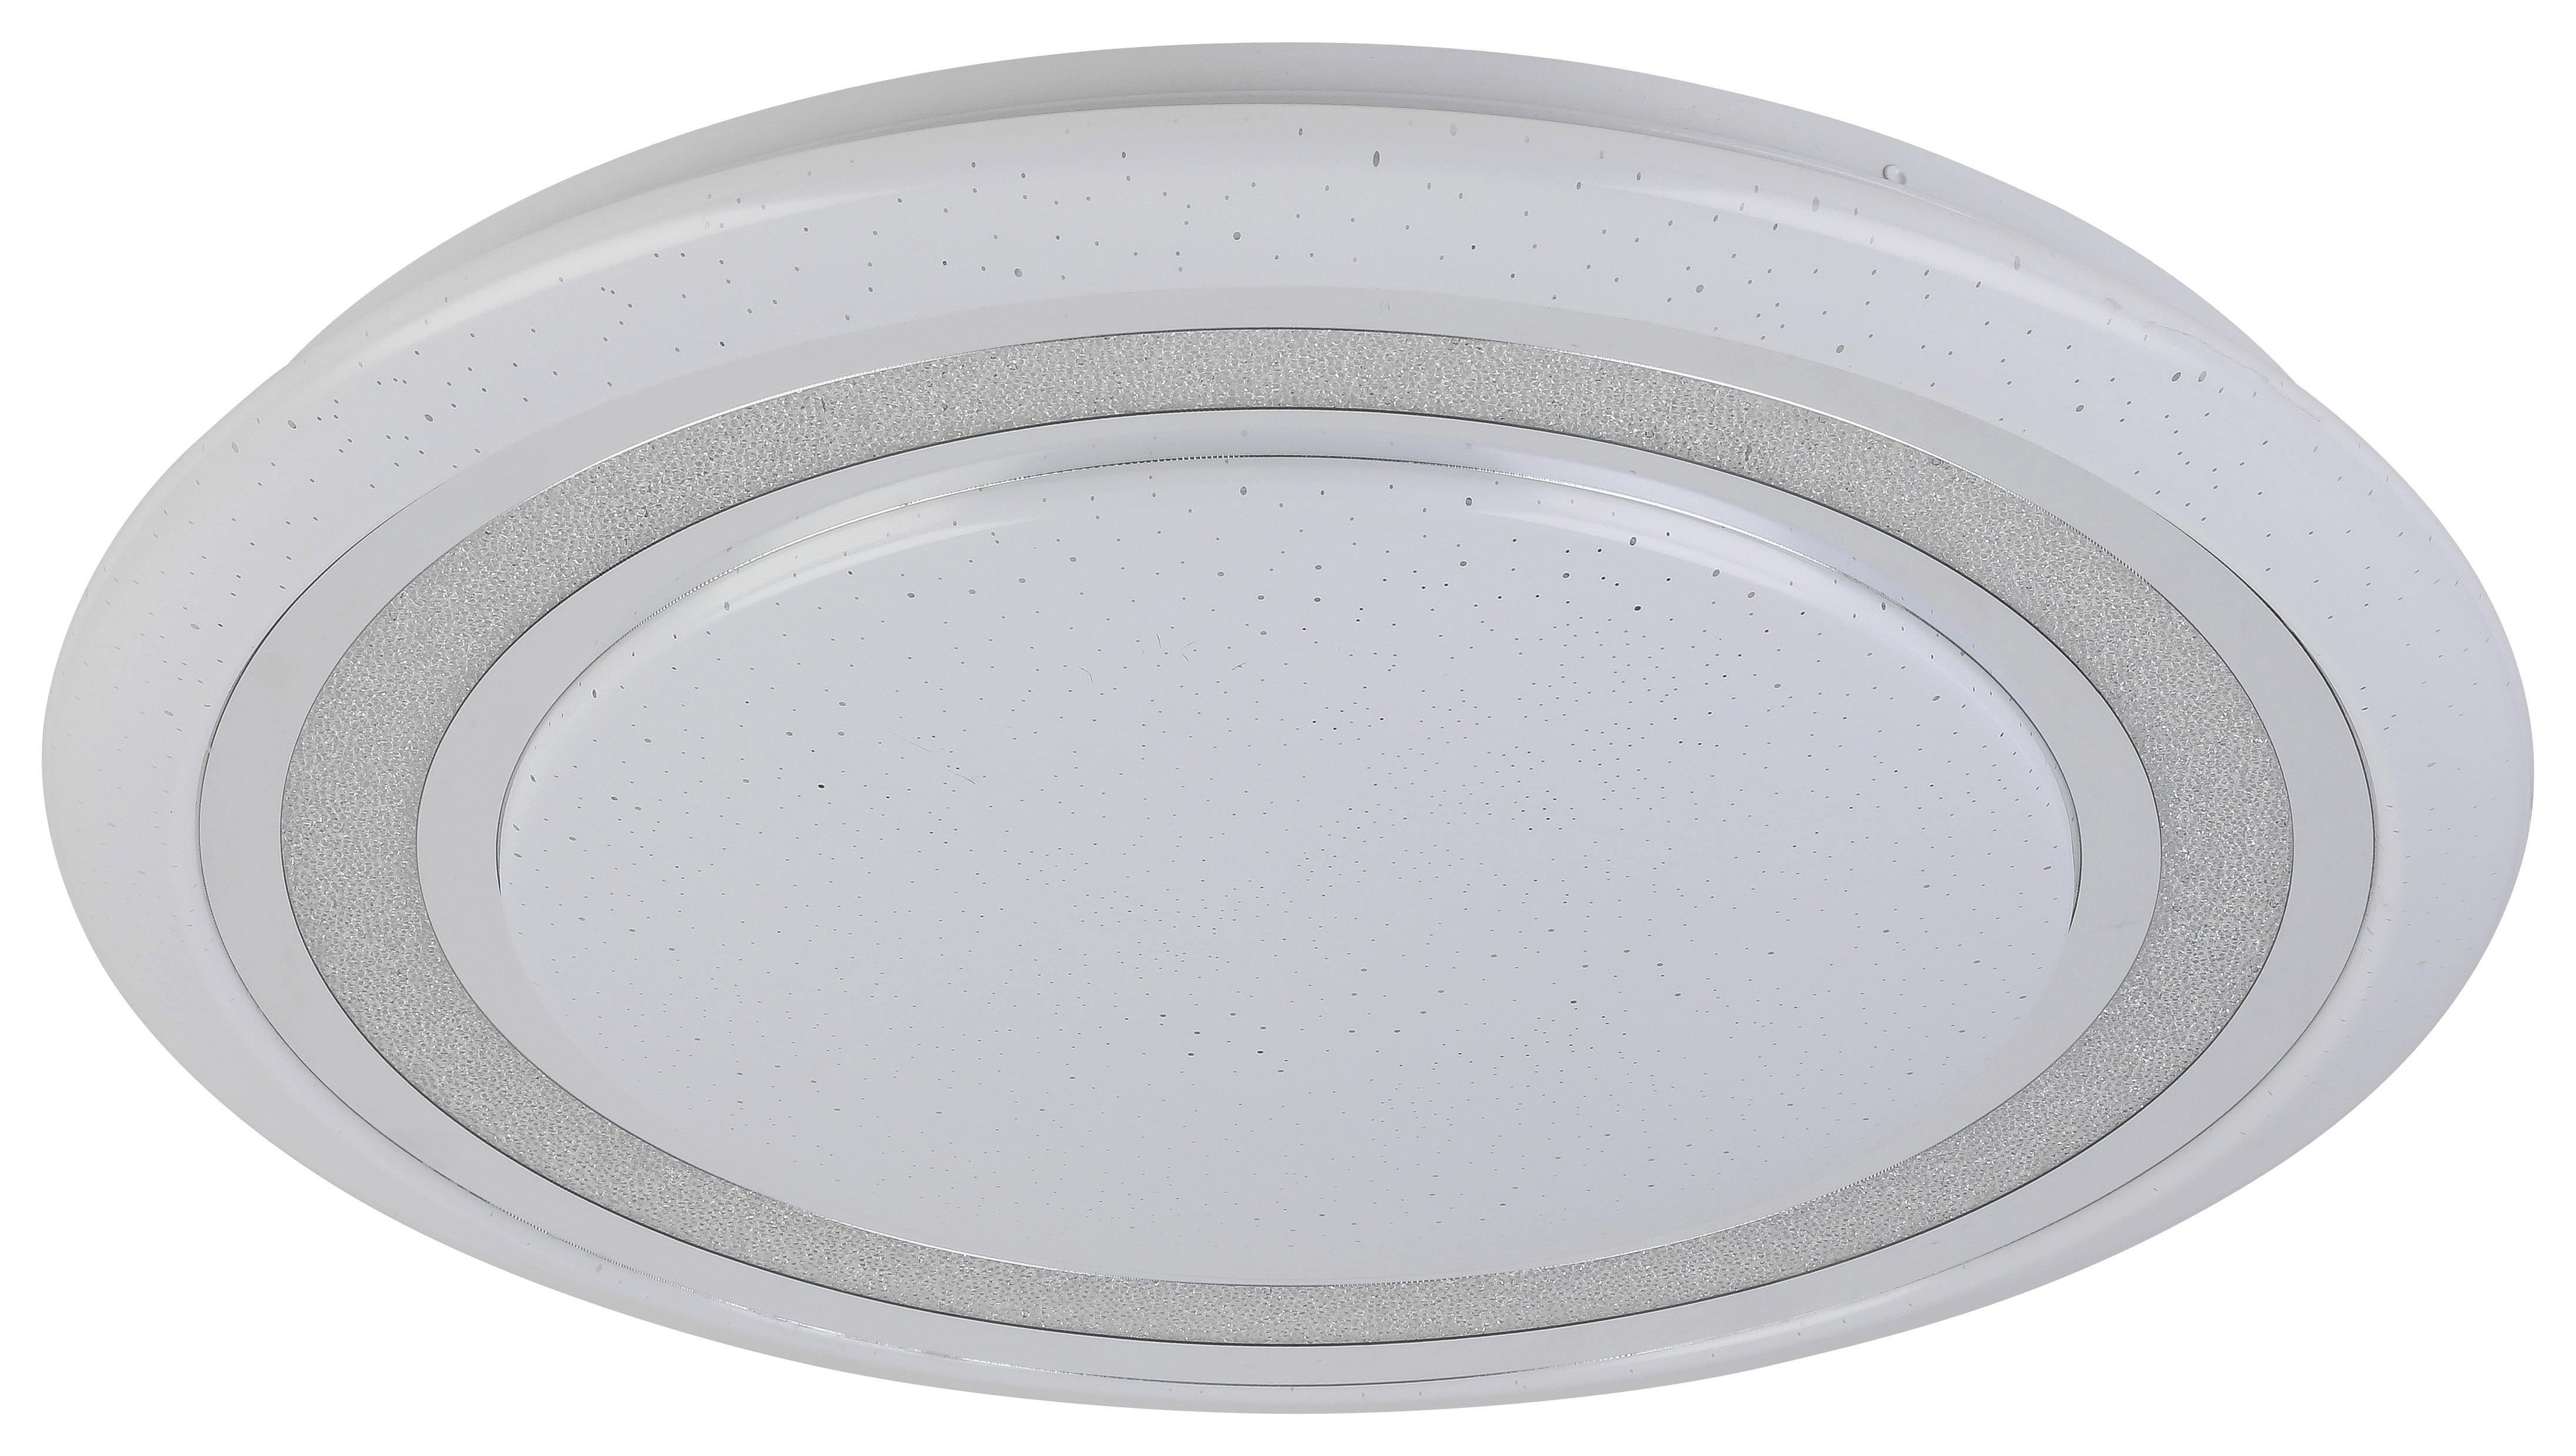 LED-Deckenleuchte Giesbert max. 42 Watt - Weiß, MODERN, Kunststoff/Metall (55/8cm) - Premium Living